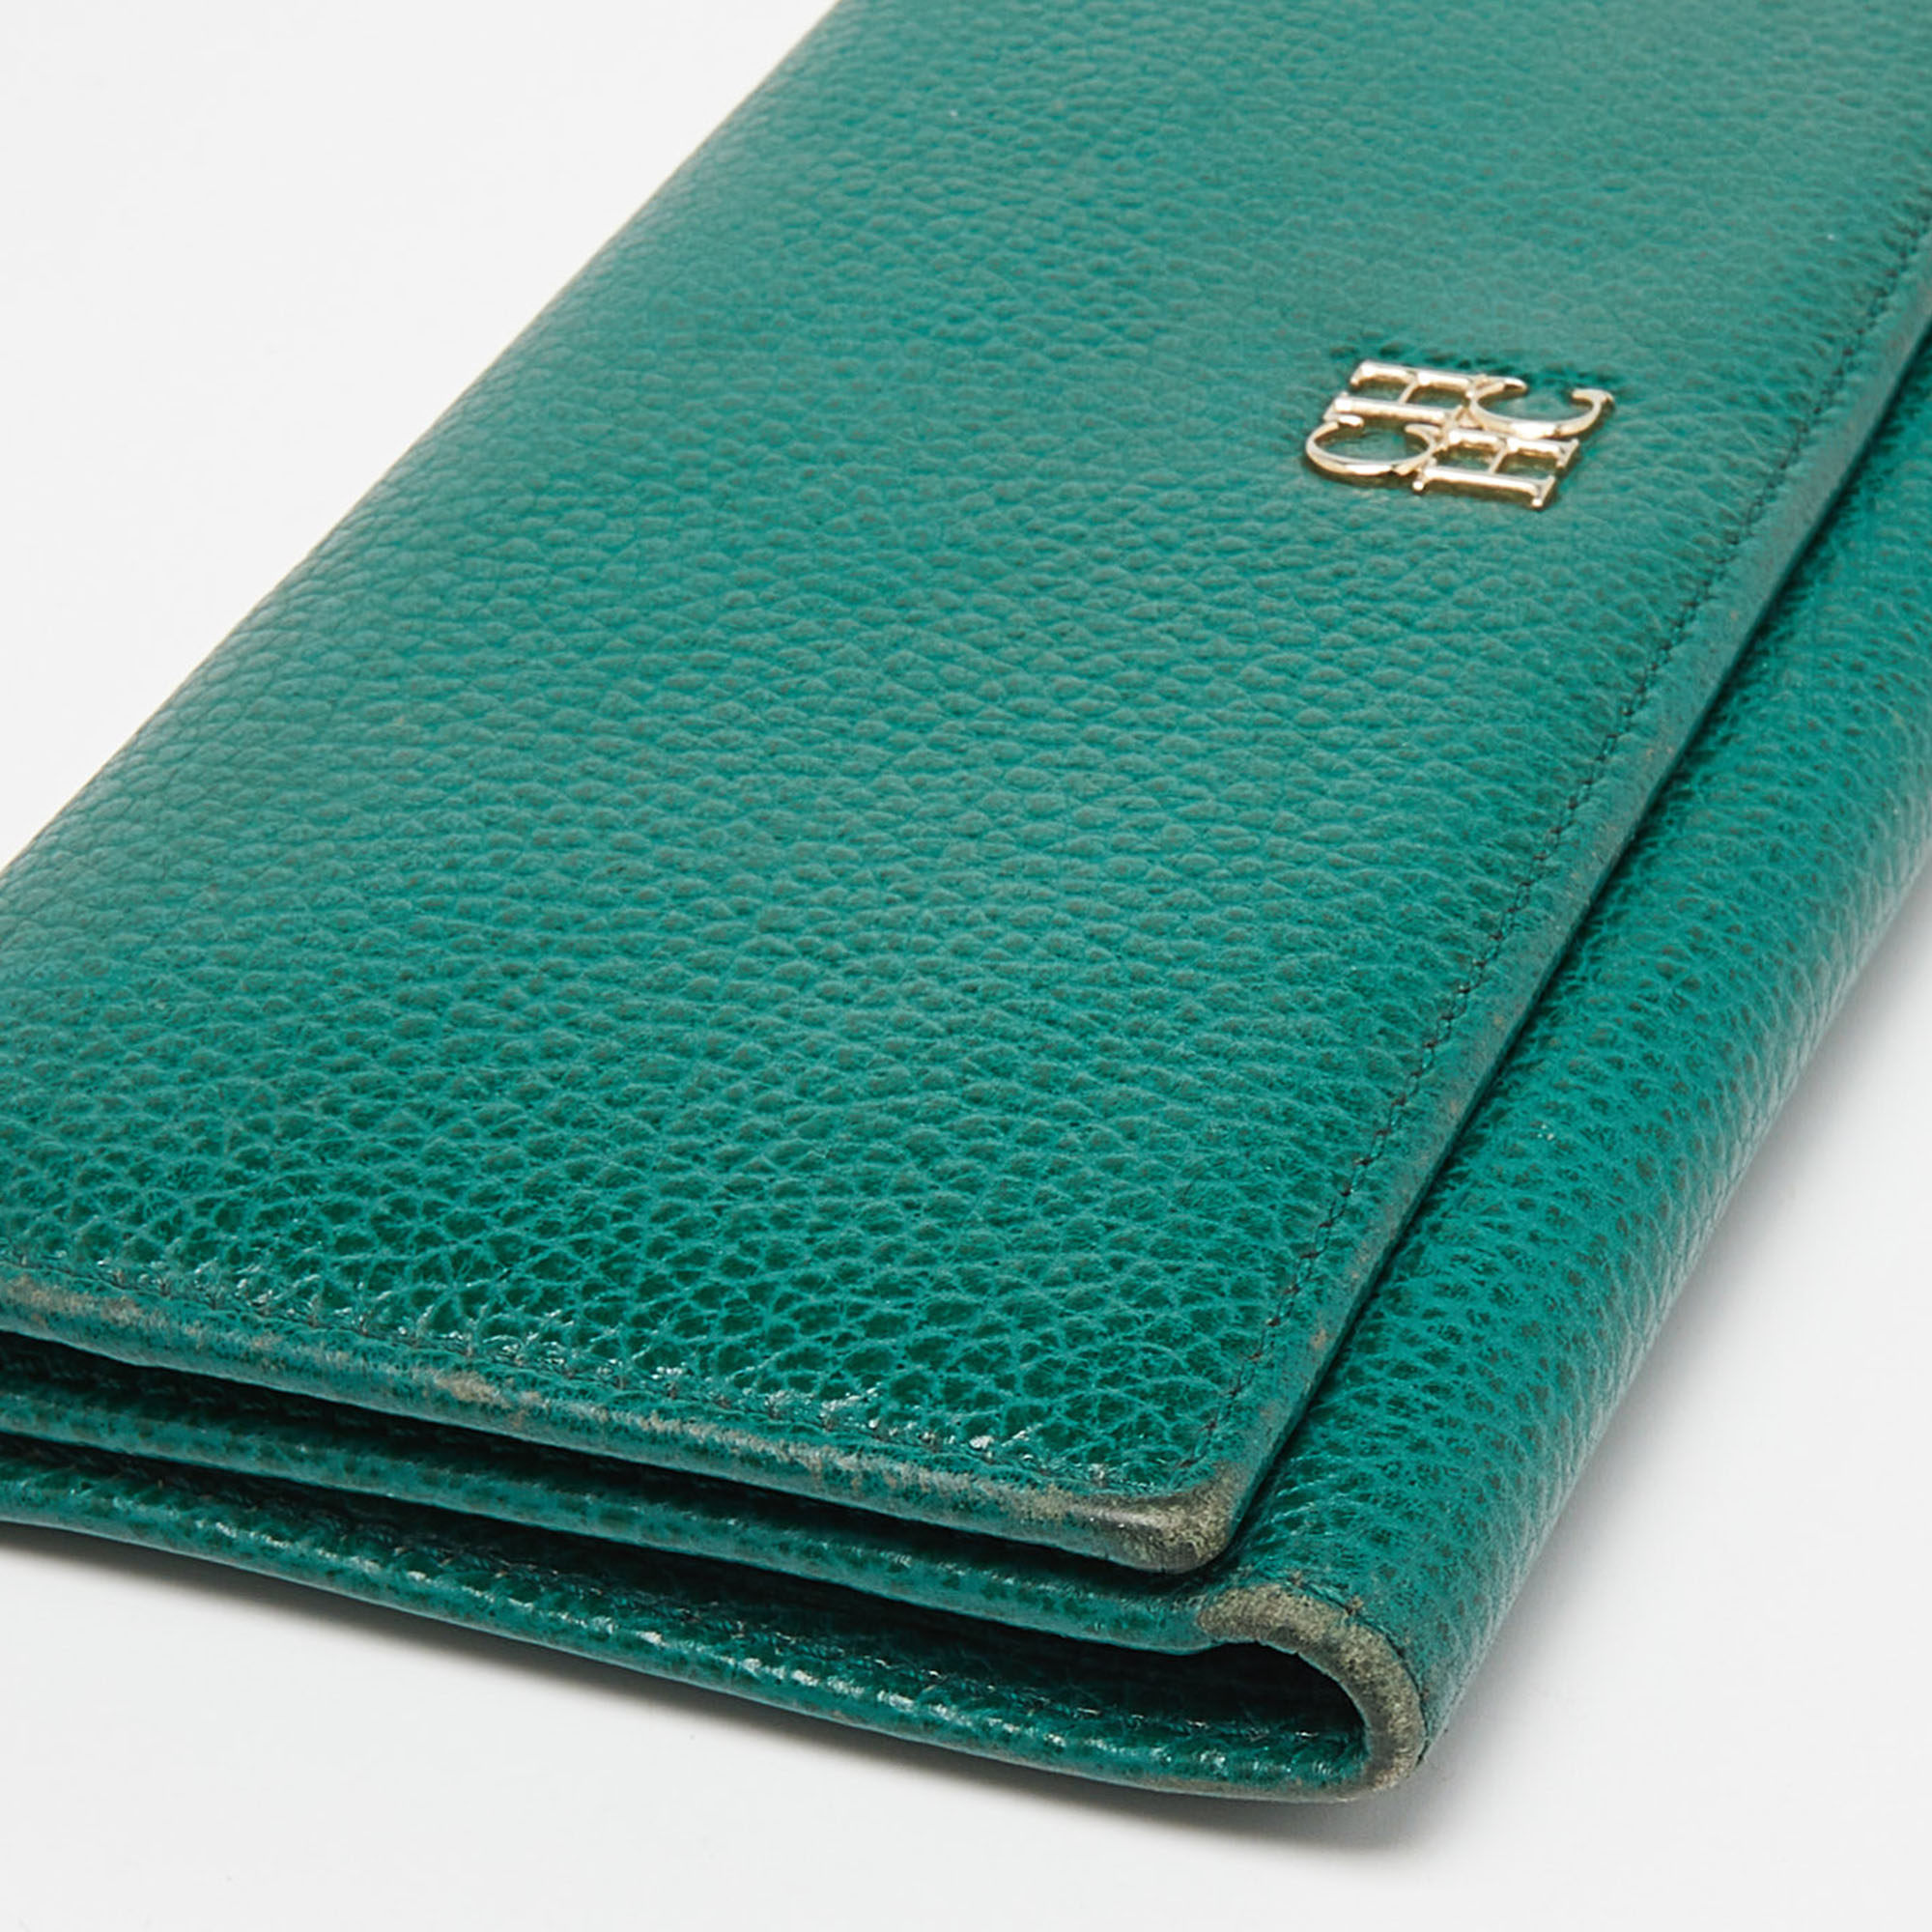 CH Carolina Herrera Green Leather Flap Trifold Continental Wallet